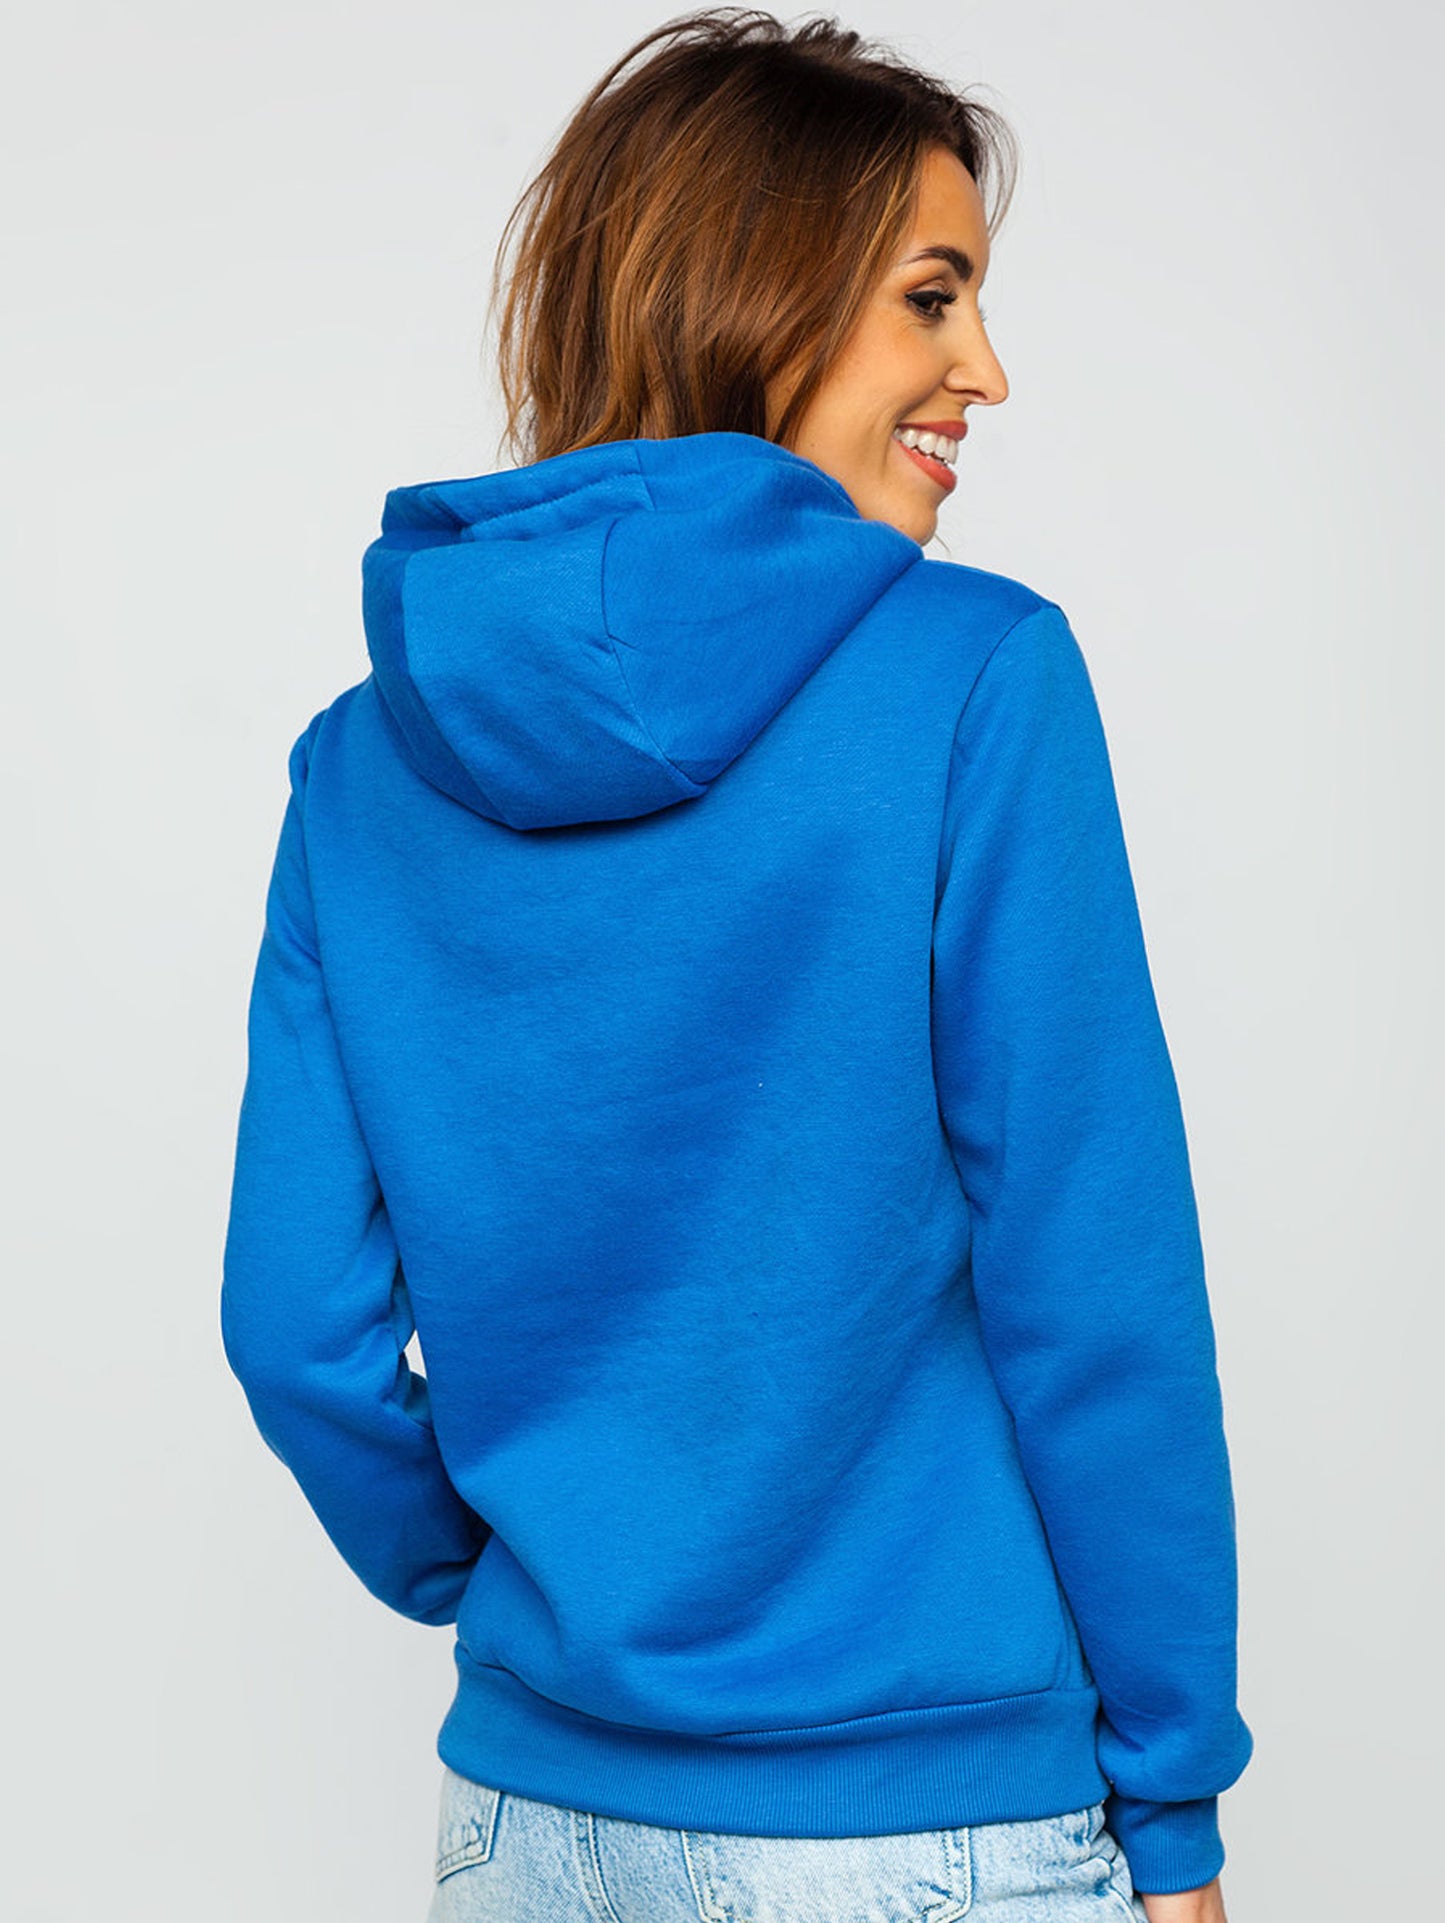 Basic Women's Royal Blue Hoodie